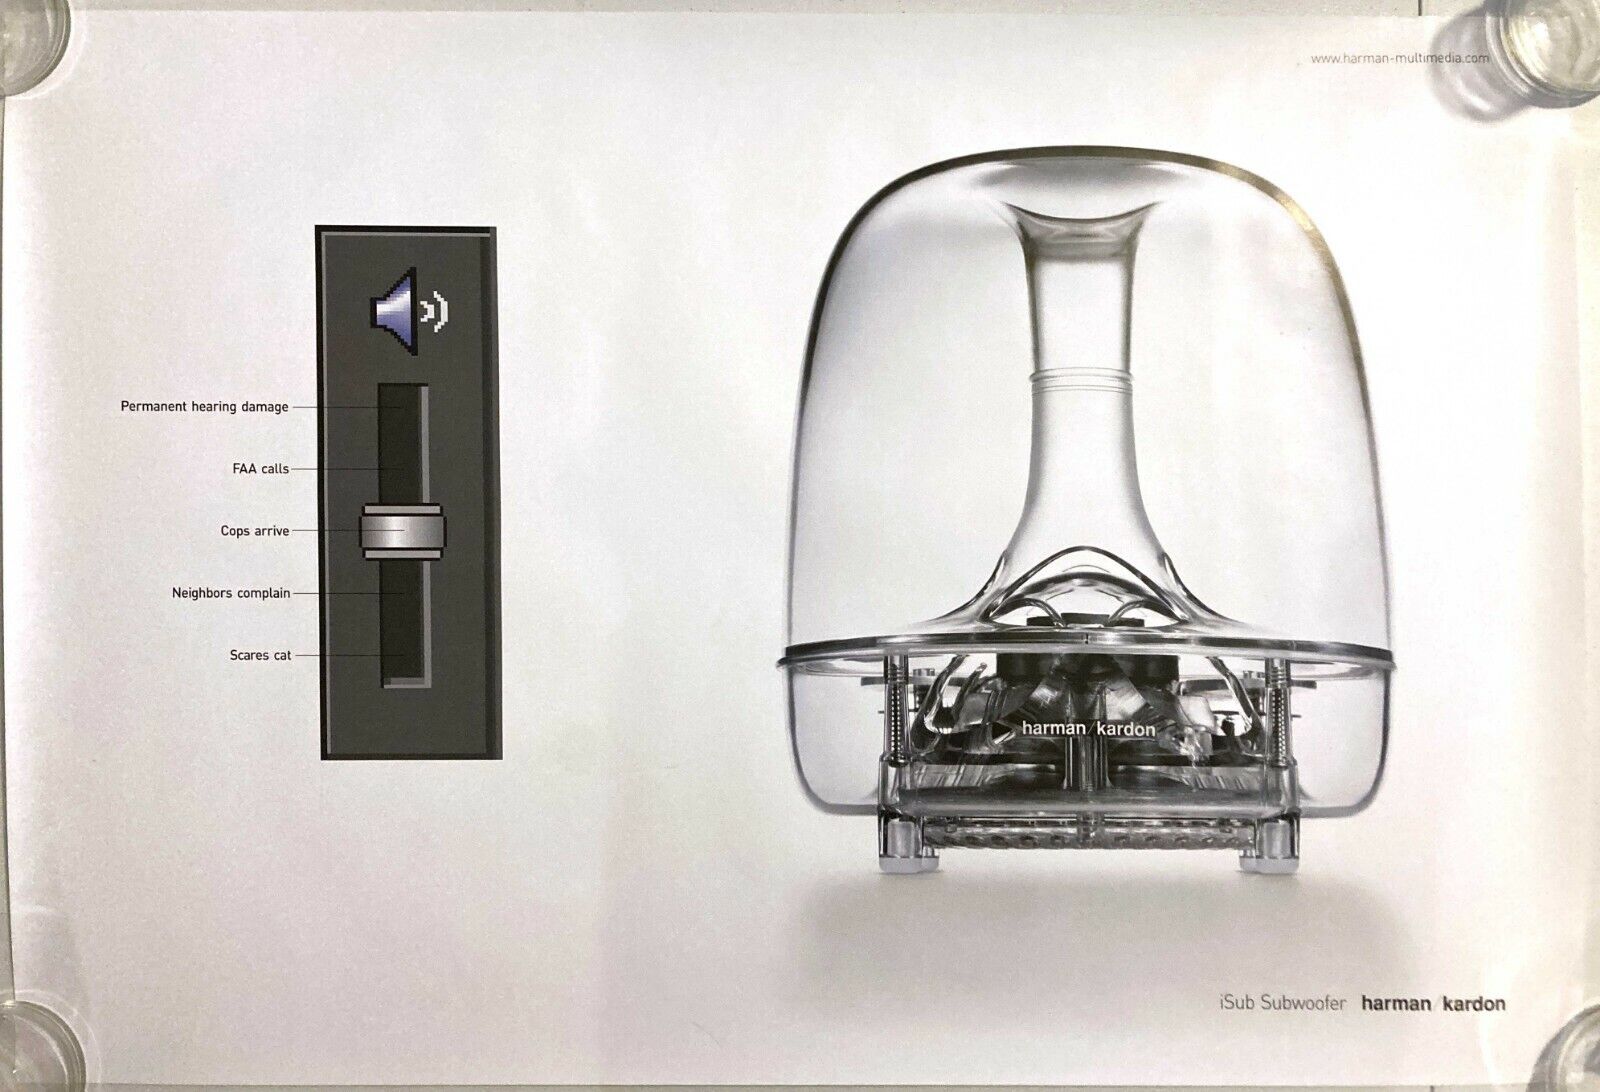 RARE Vintage Apple Computer iSUB Harman Kardon Hearing Damage Poster NM 1999-00